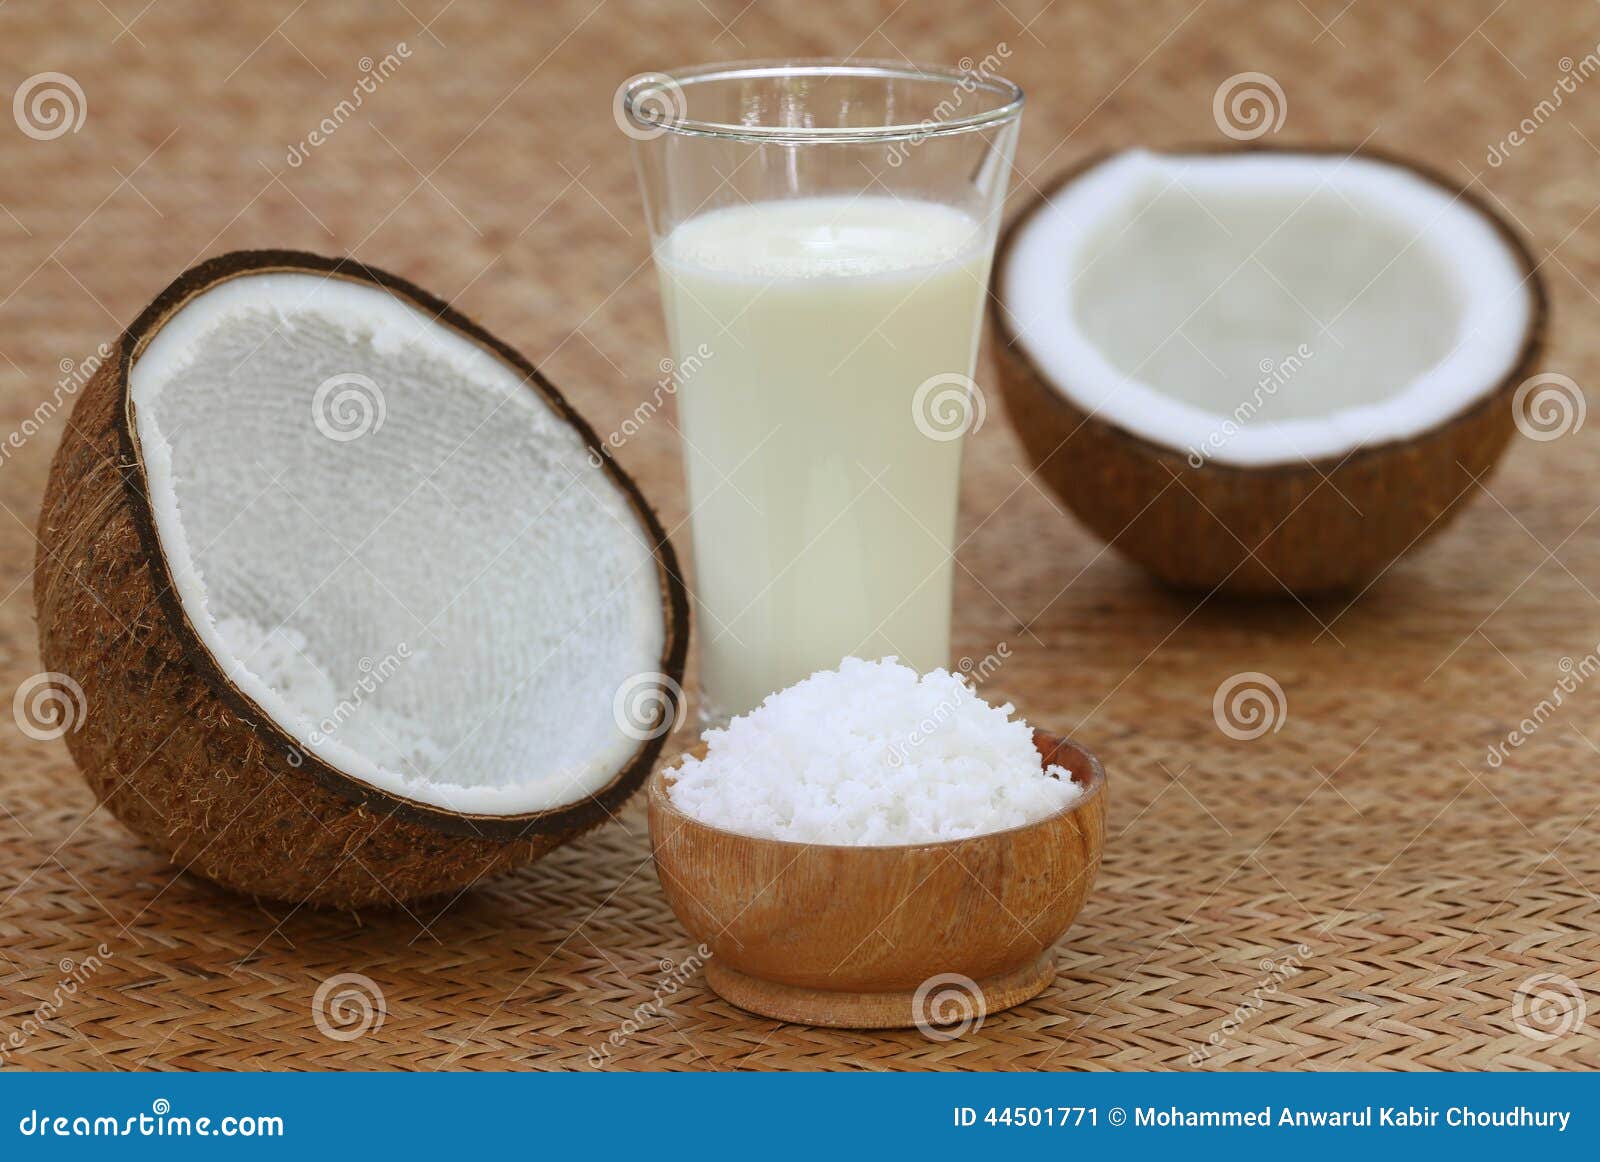 Планто кокосовое молоко. Кокосовое молоко. Кокос молоко. Цвет кокосовое молоко. Кокосовое молоко в кокосе.